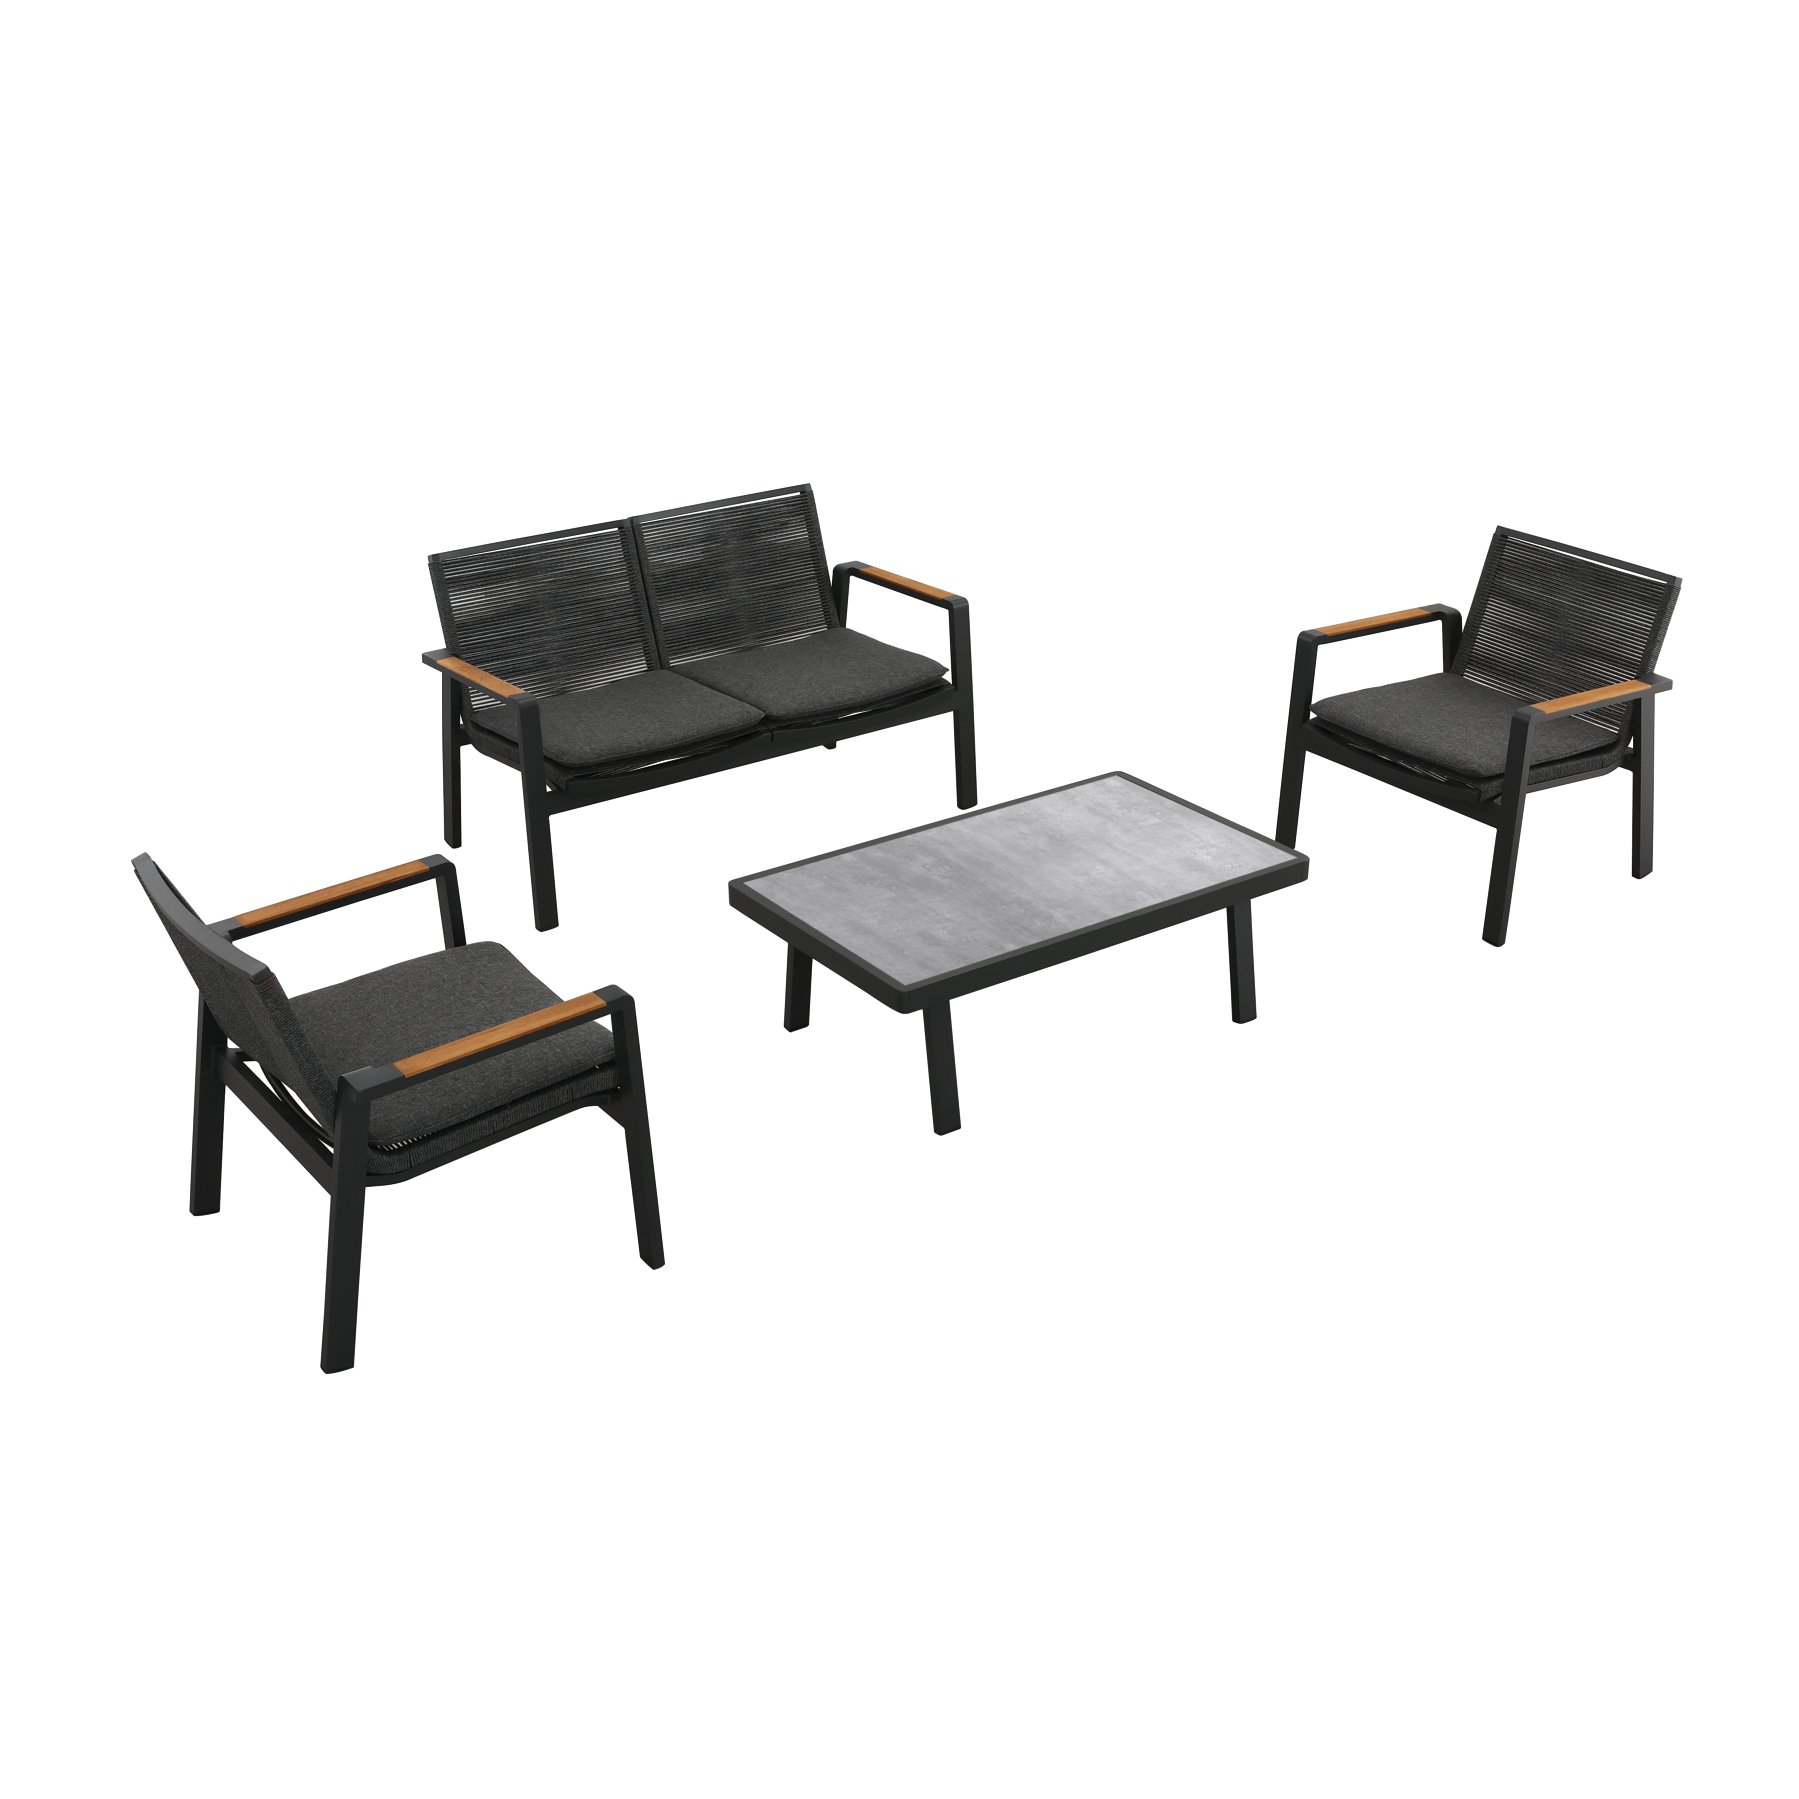 Nofi 3.0 Rope 2 Seat Sofa & Coffee Table Set - PadioLiving - Nofi 3.0 Rope 2 Seat Sofa & Coffee Table Set - Outdoor Sofa and Coffee Table Set - PadioLiving